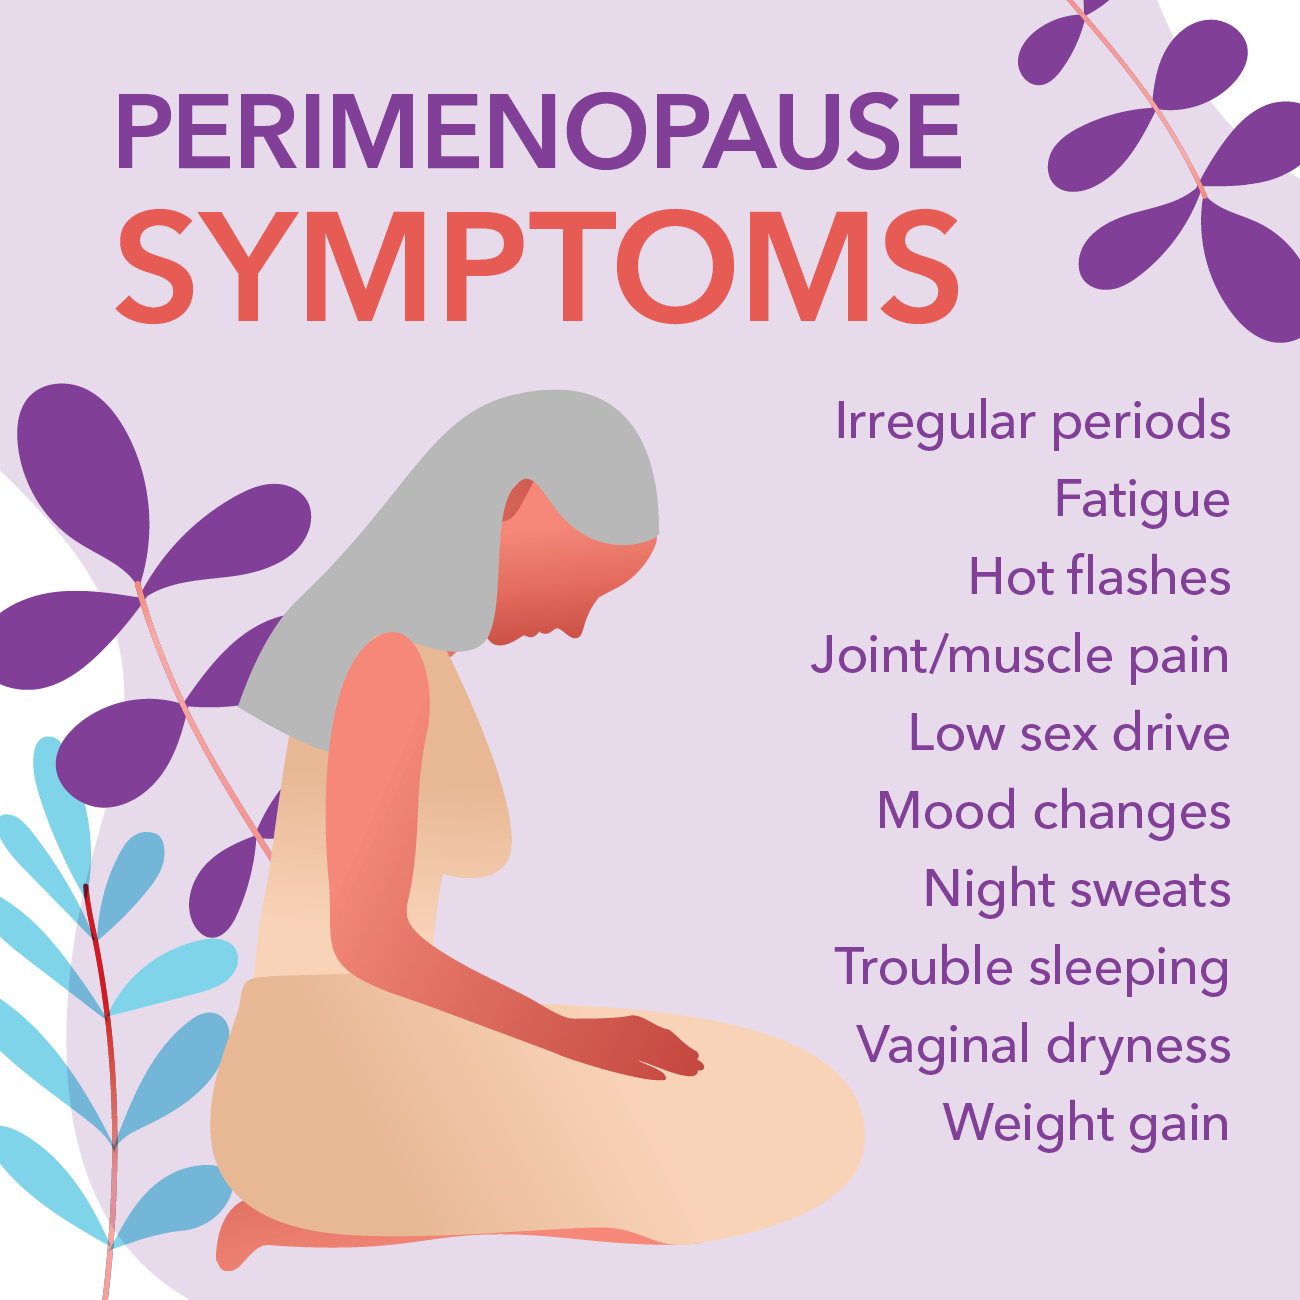 Perimenopause Symptoms graphic.jpg